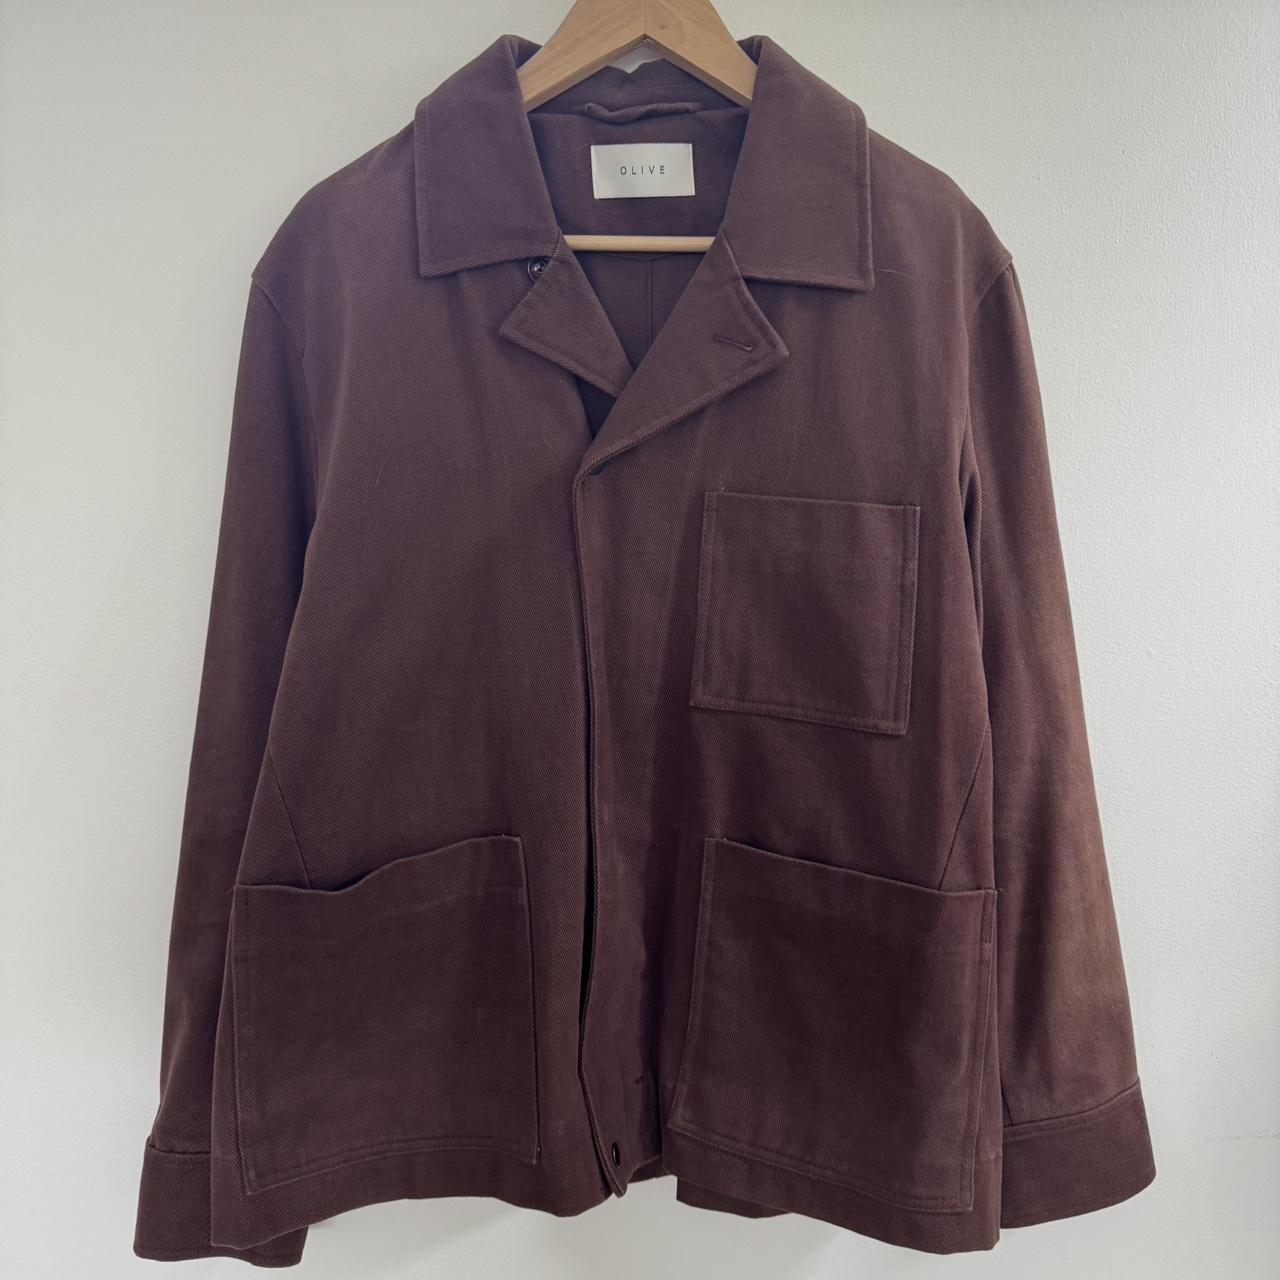 Olive menswear Chore coat Size: Medium Color:... - Depop